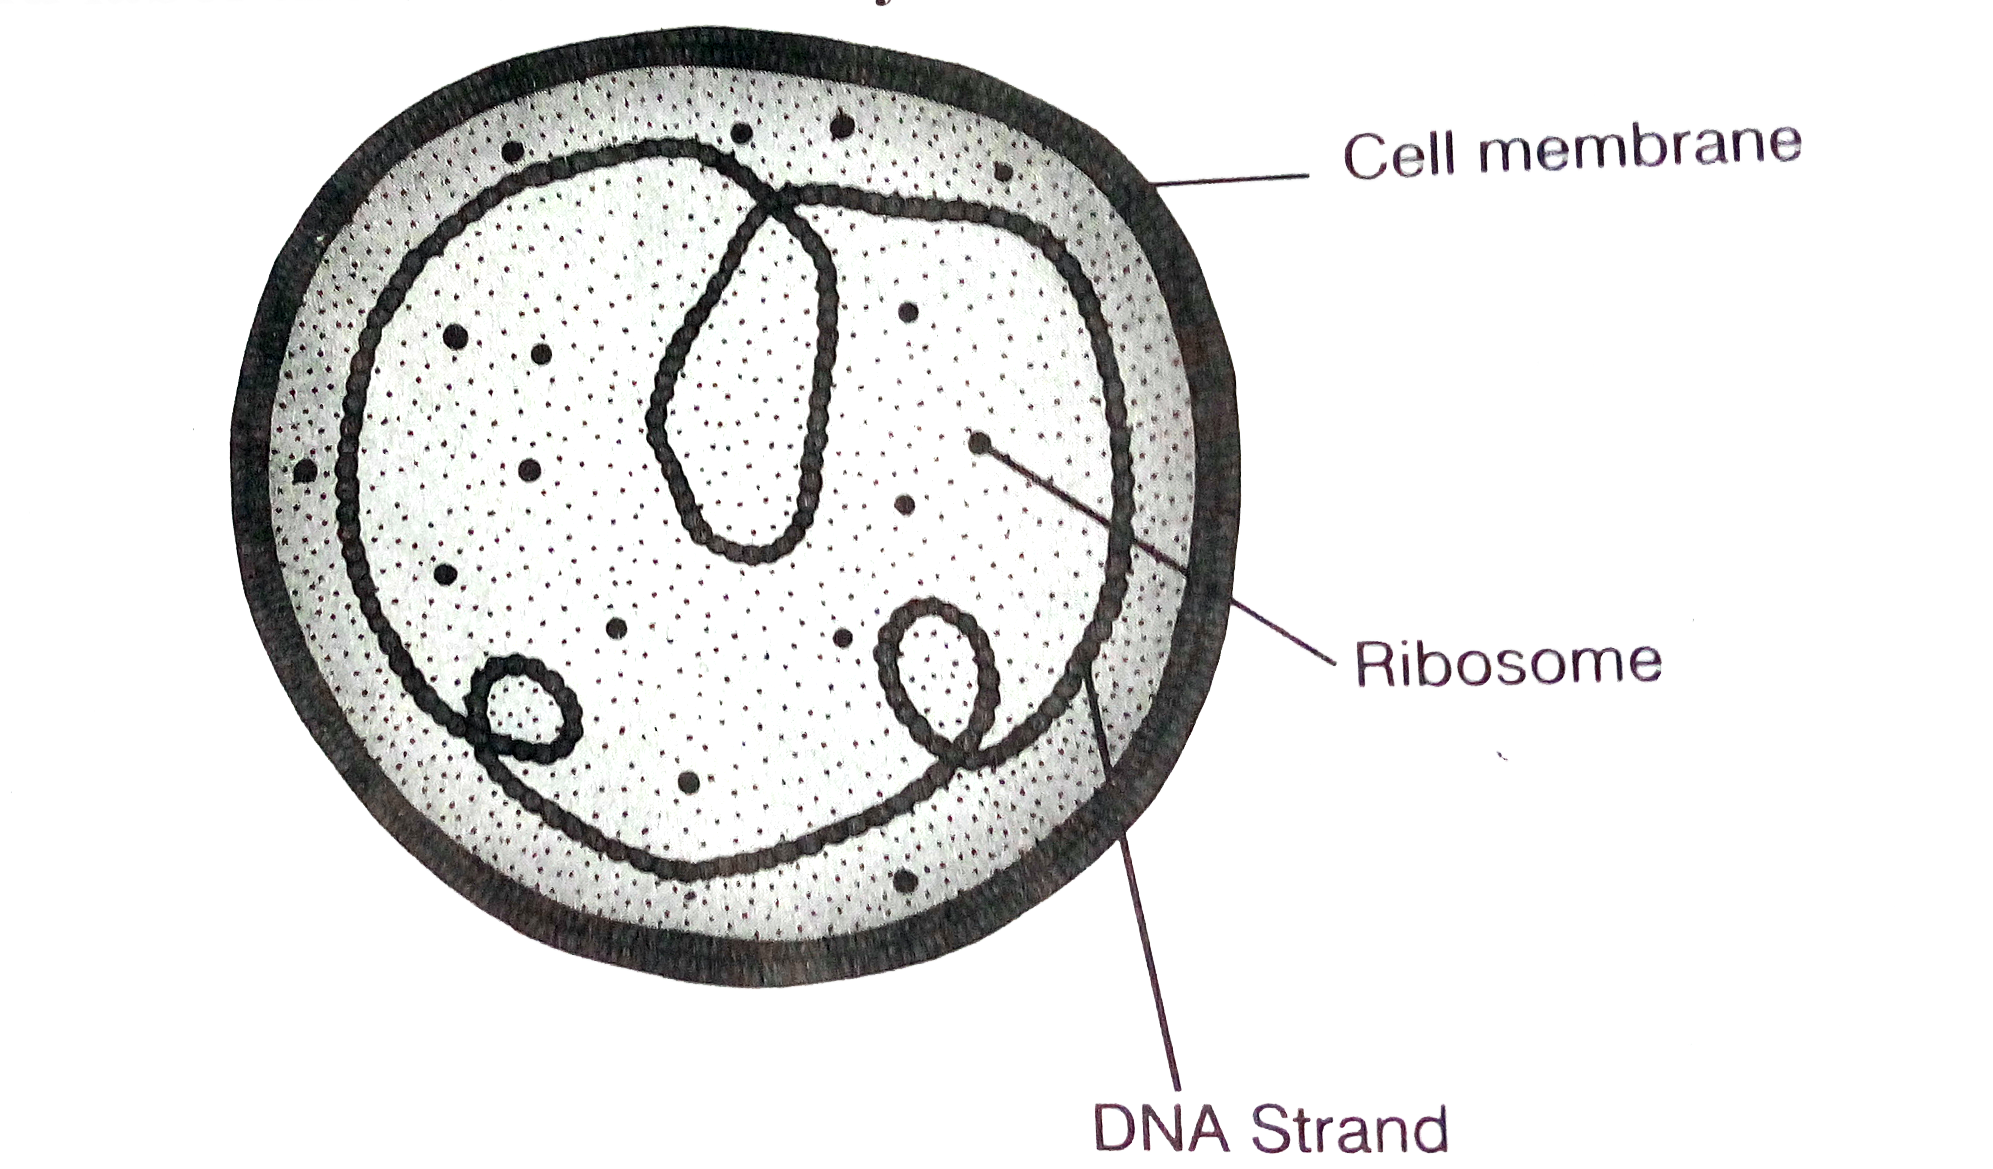 mycoplasma structure